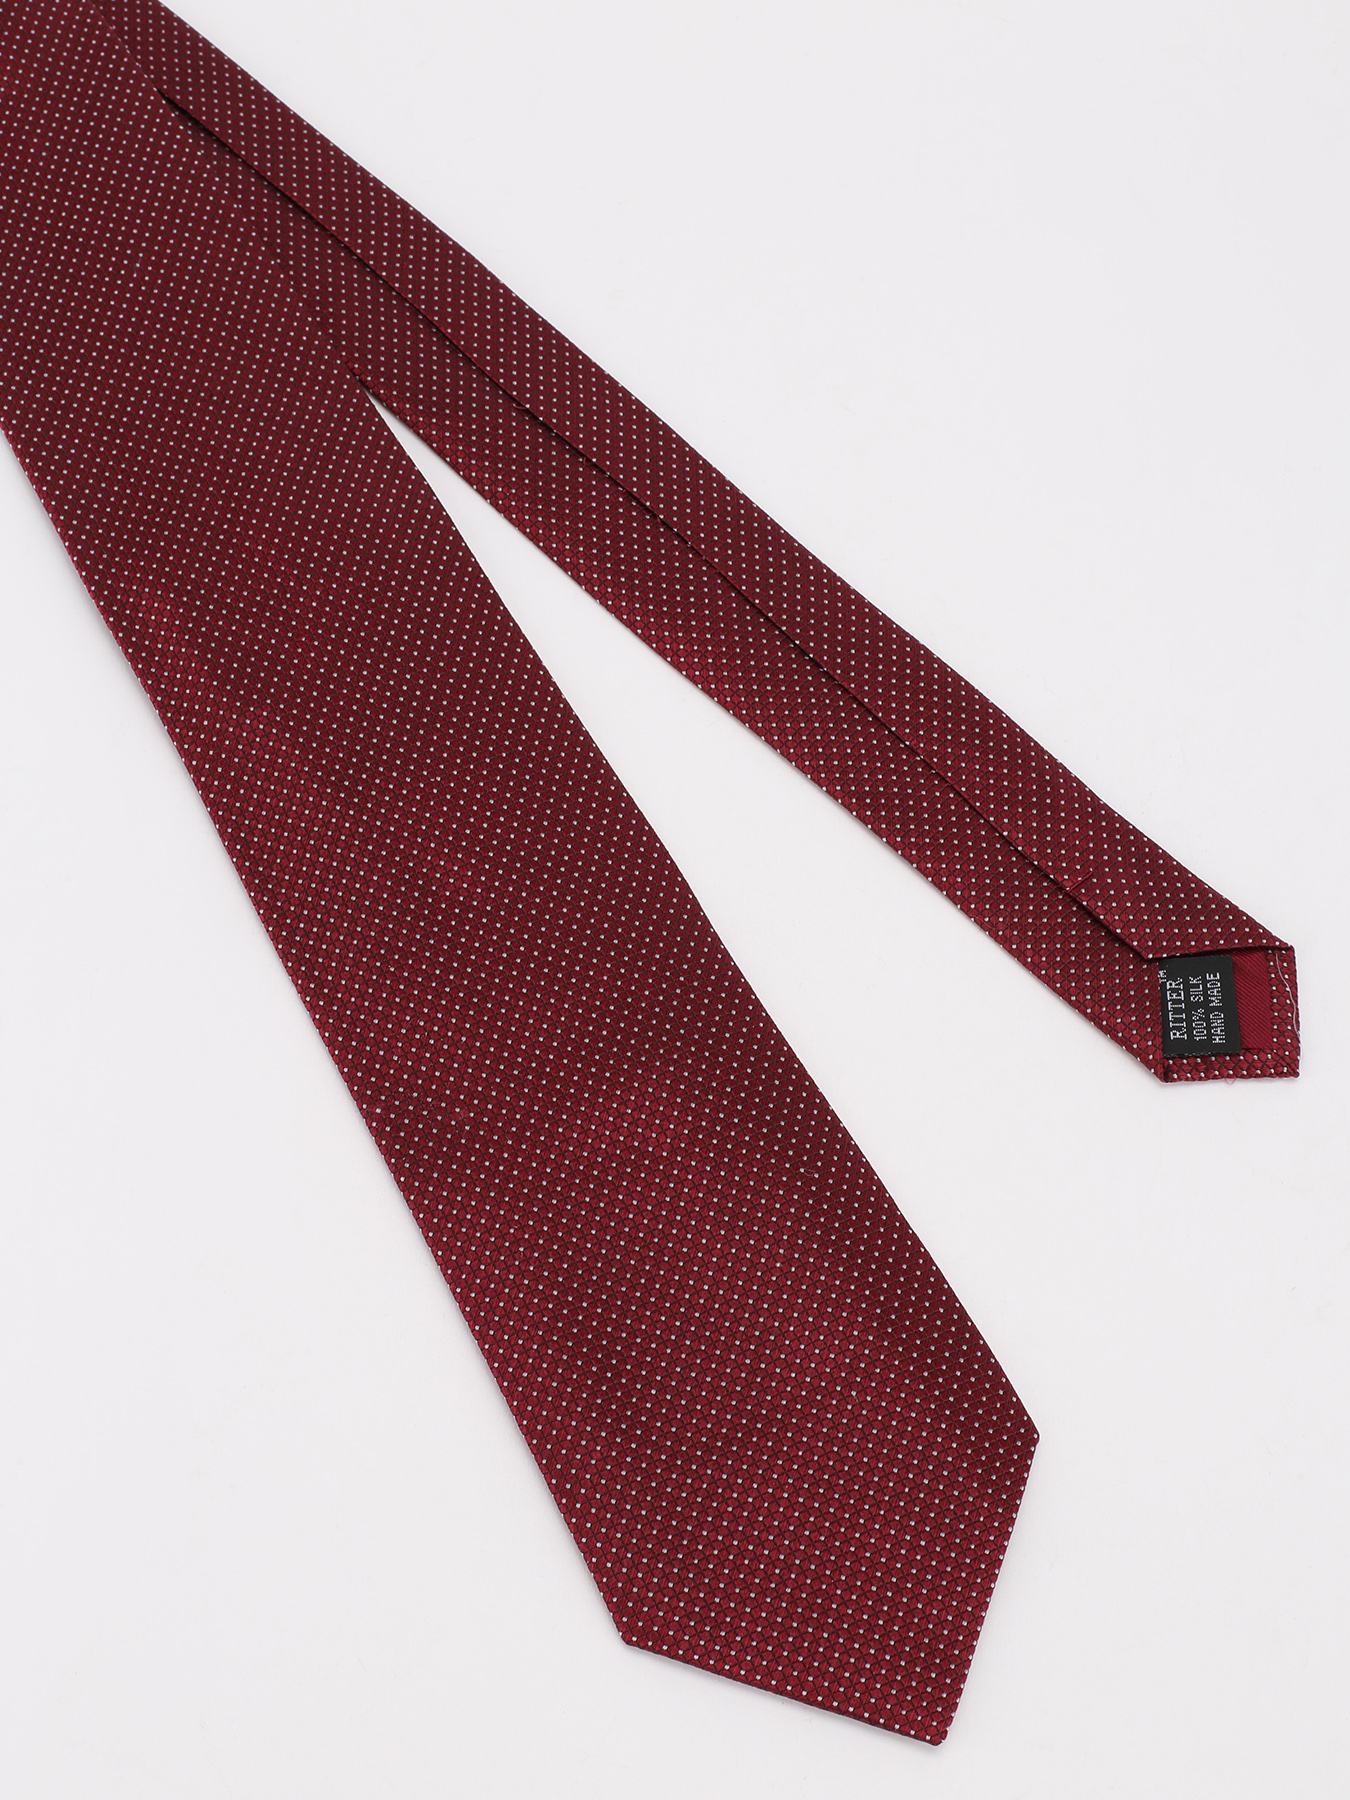 Ritter Шелковый галстук с узорами 323009-185 Фото 3